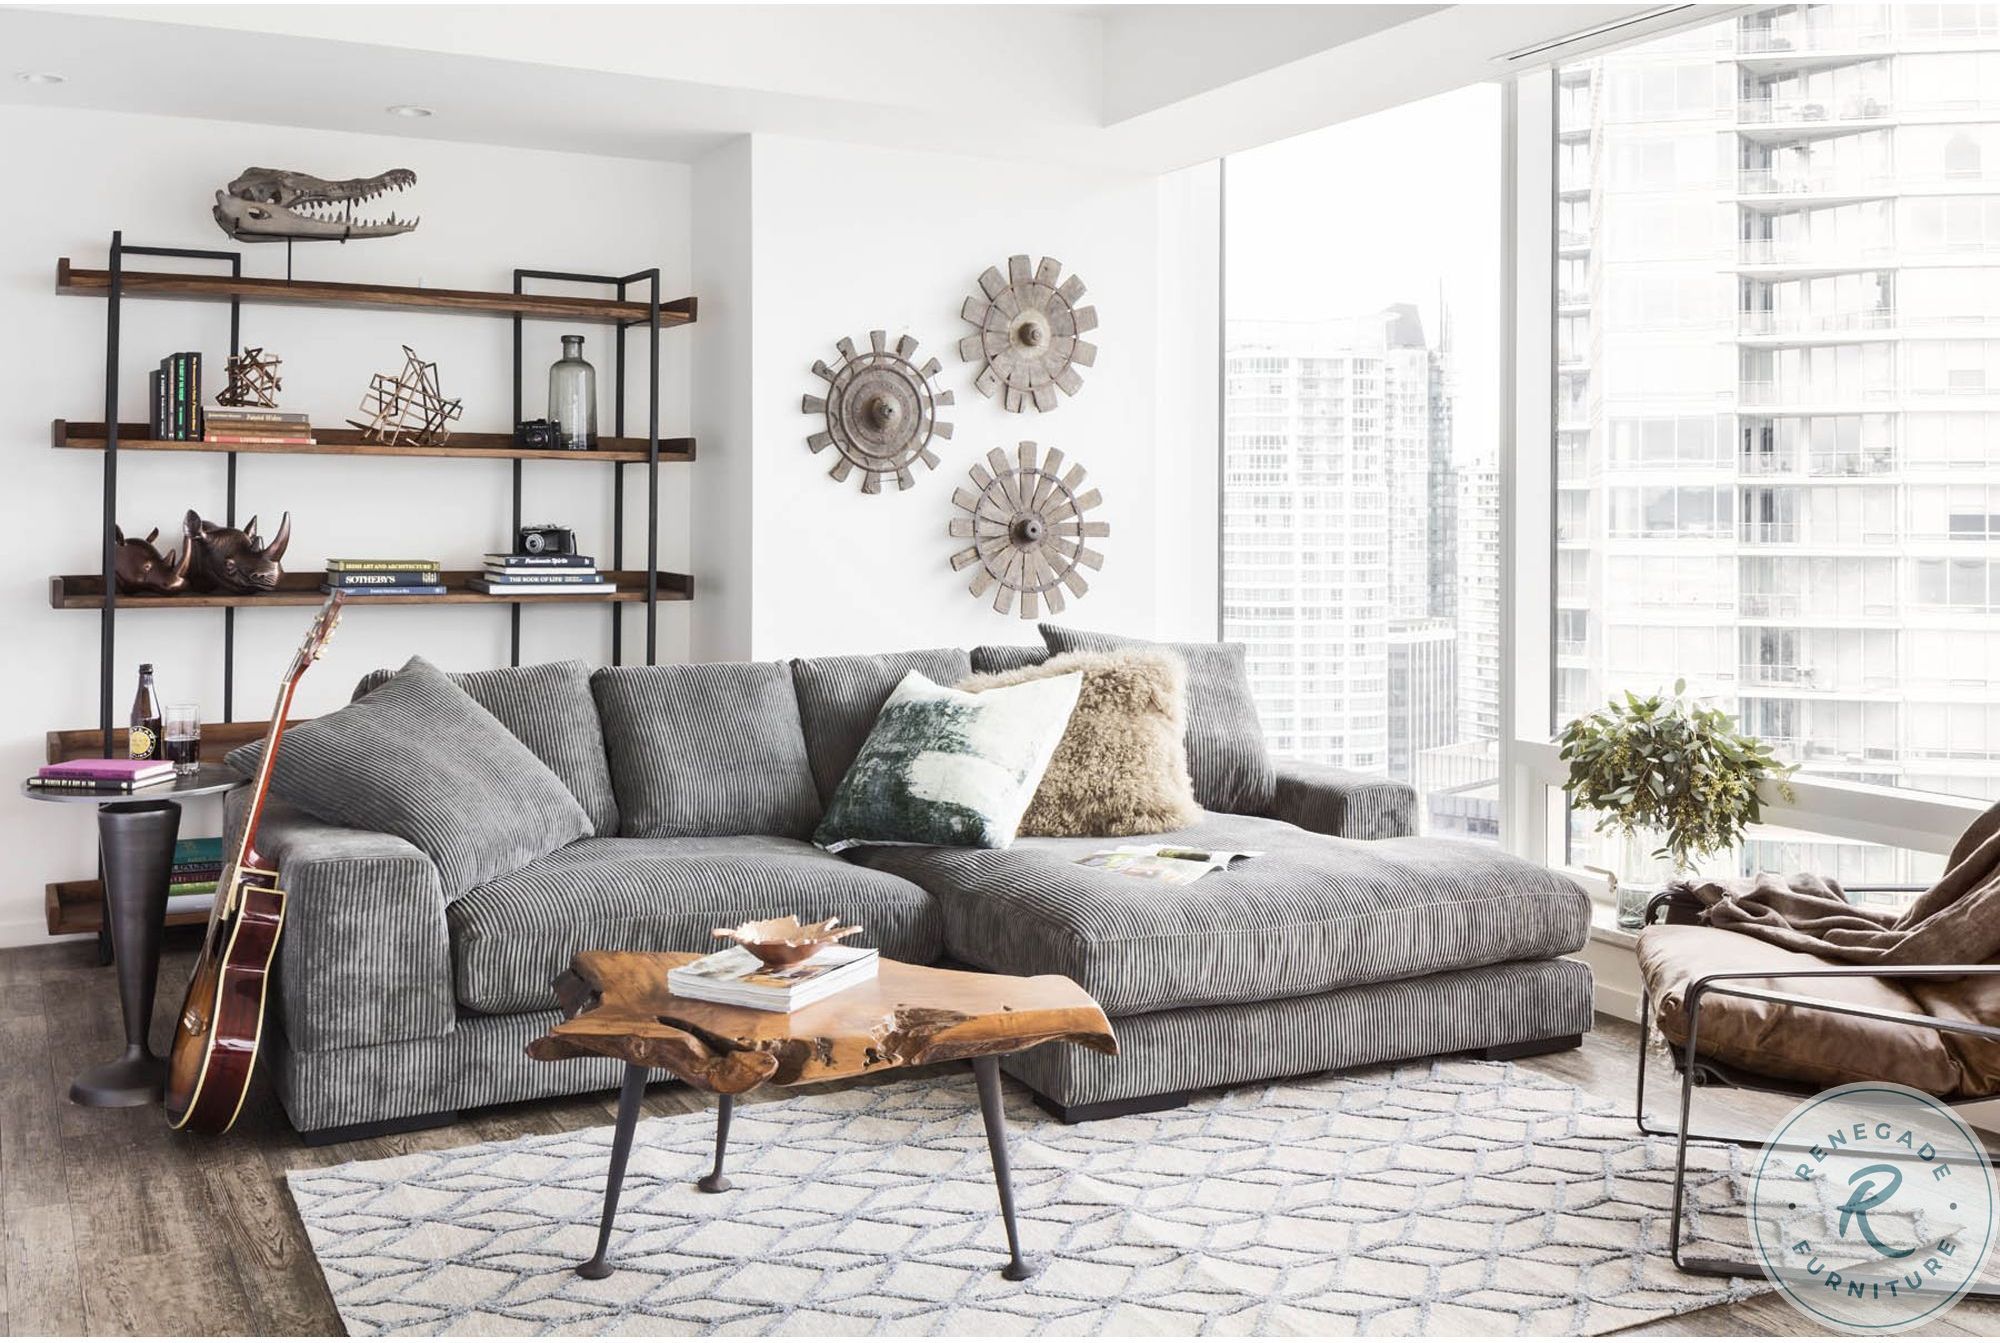 Plunge Light Blue Sectional Sofa – Modern, Comfortable, Stylish